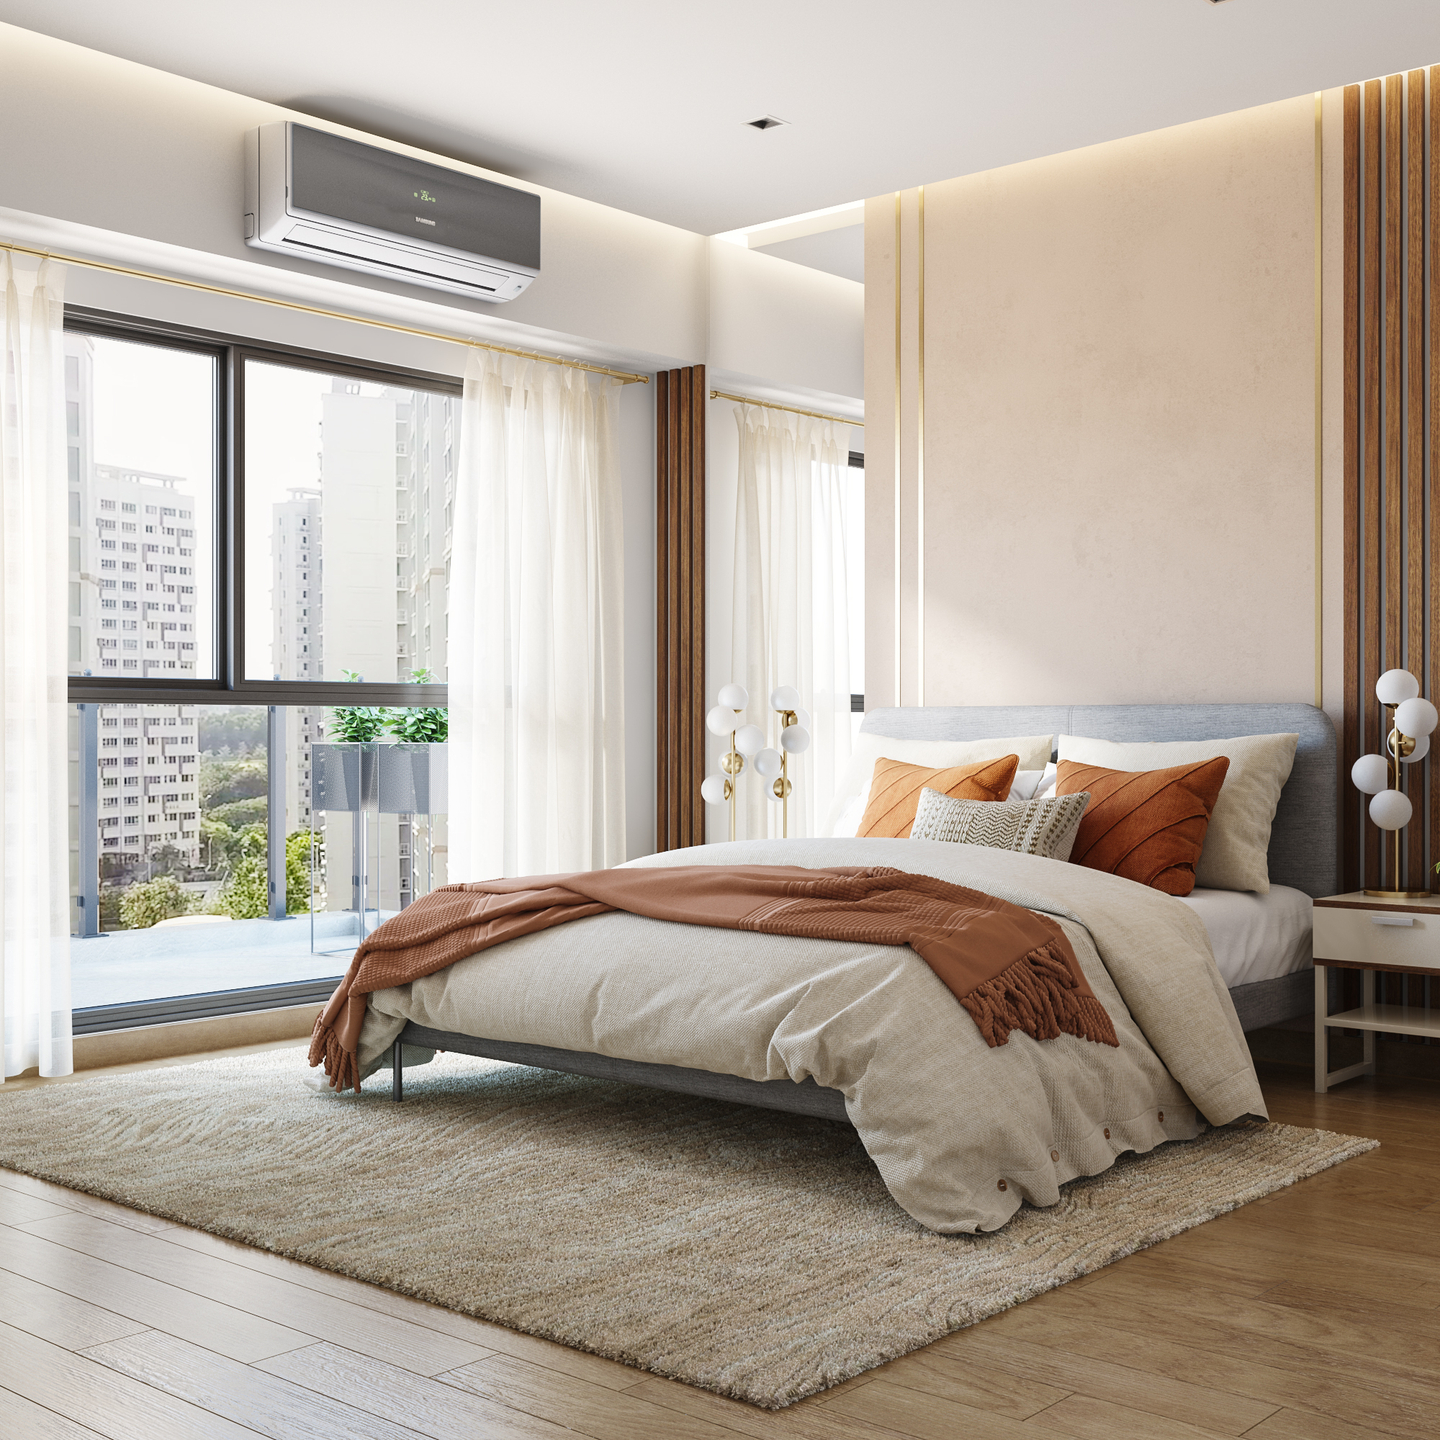 Small Master Bedroom With Sleek Wall Design